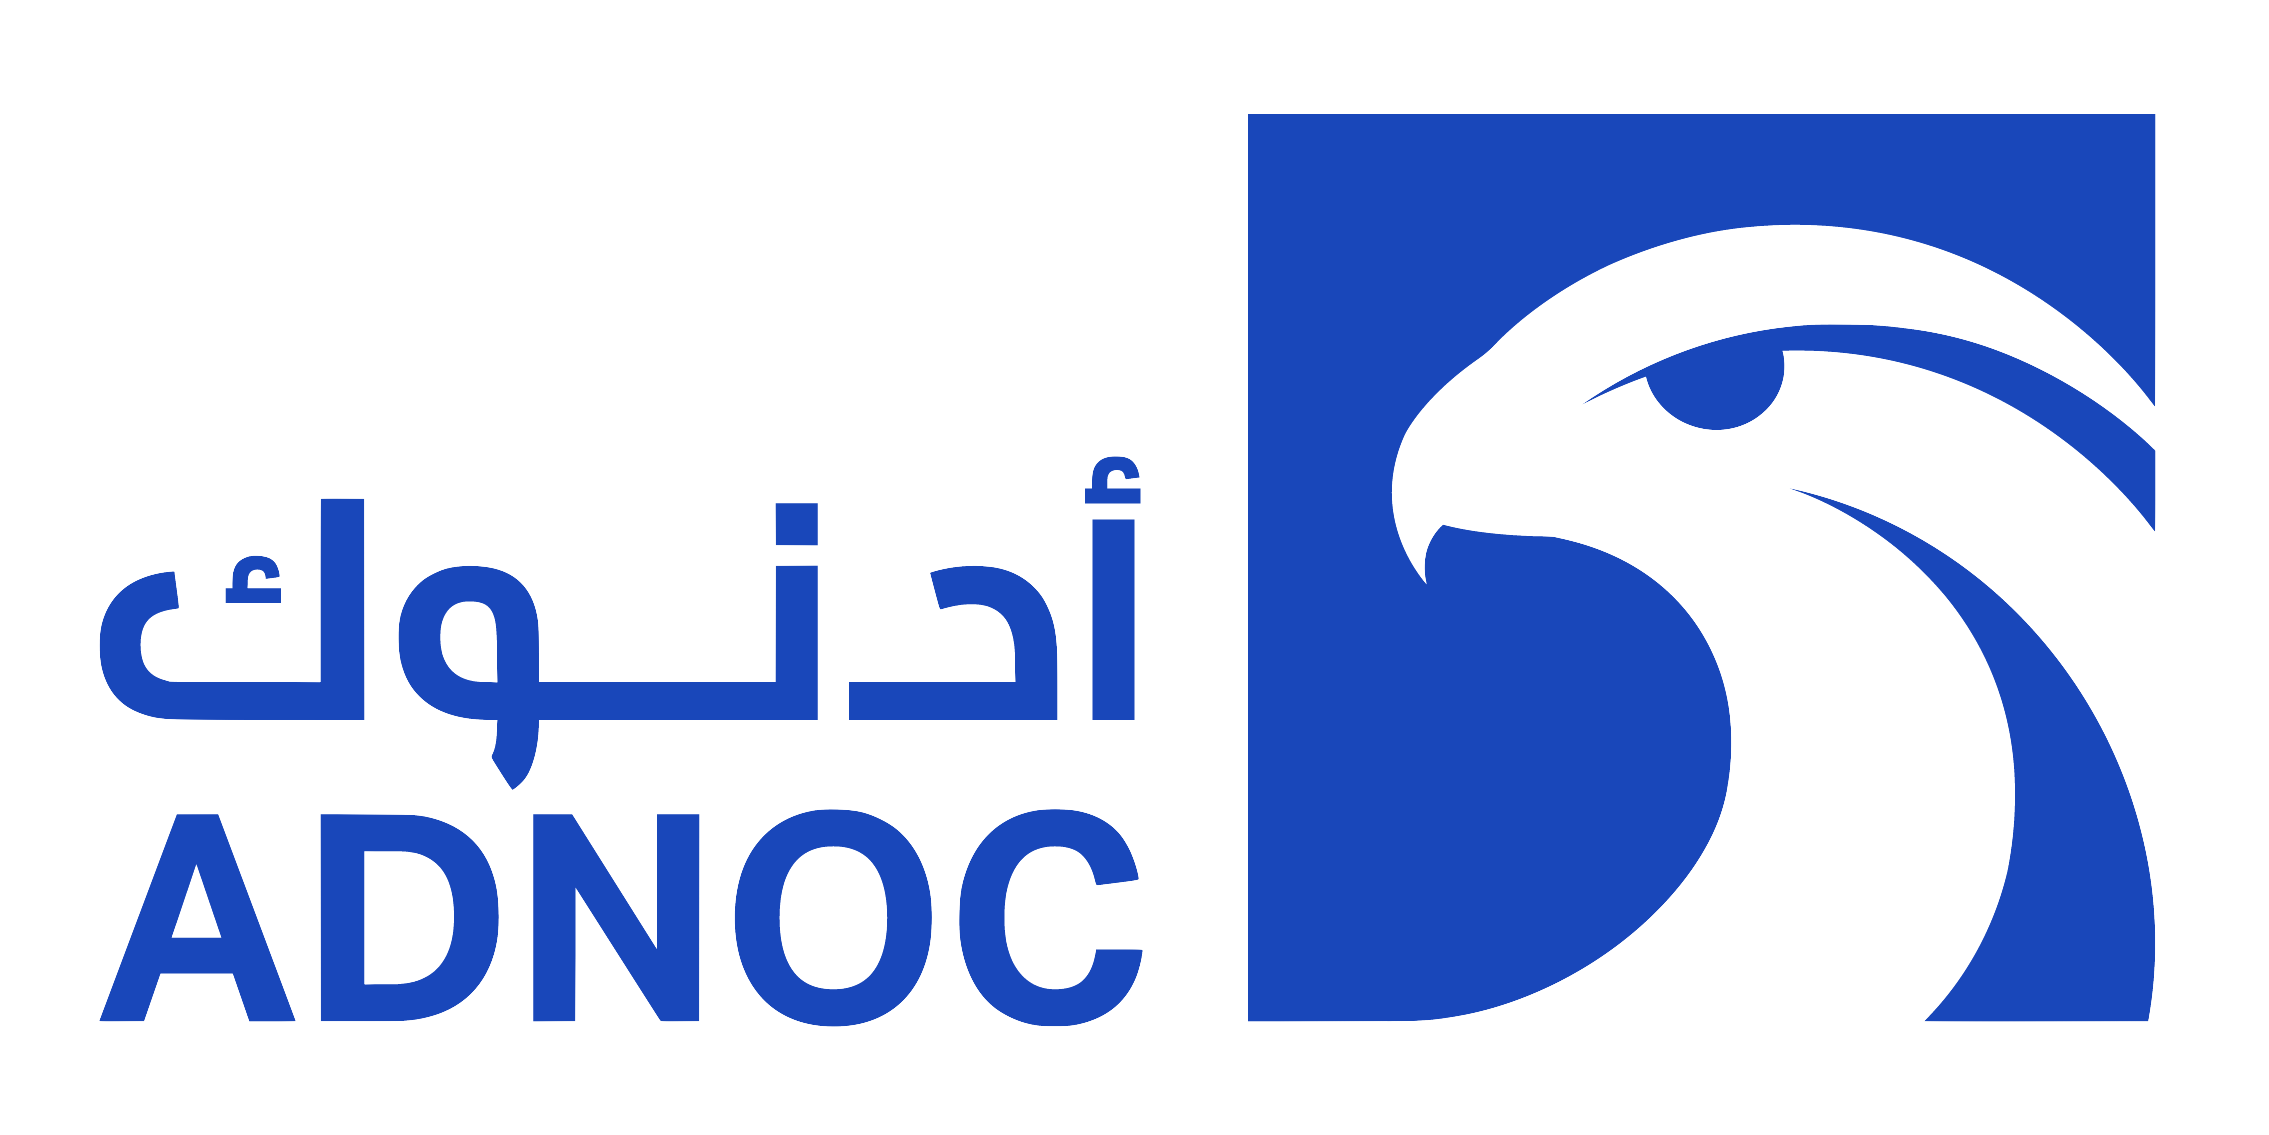 Adnoc will build a world-scale blue ammonia facility in Abu Dhabi